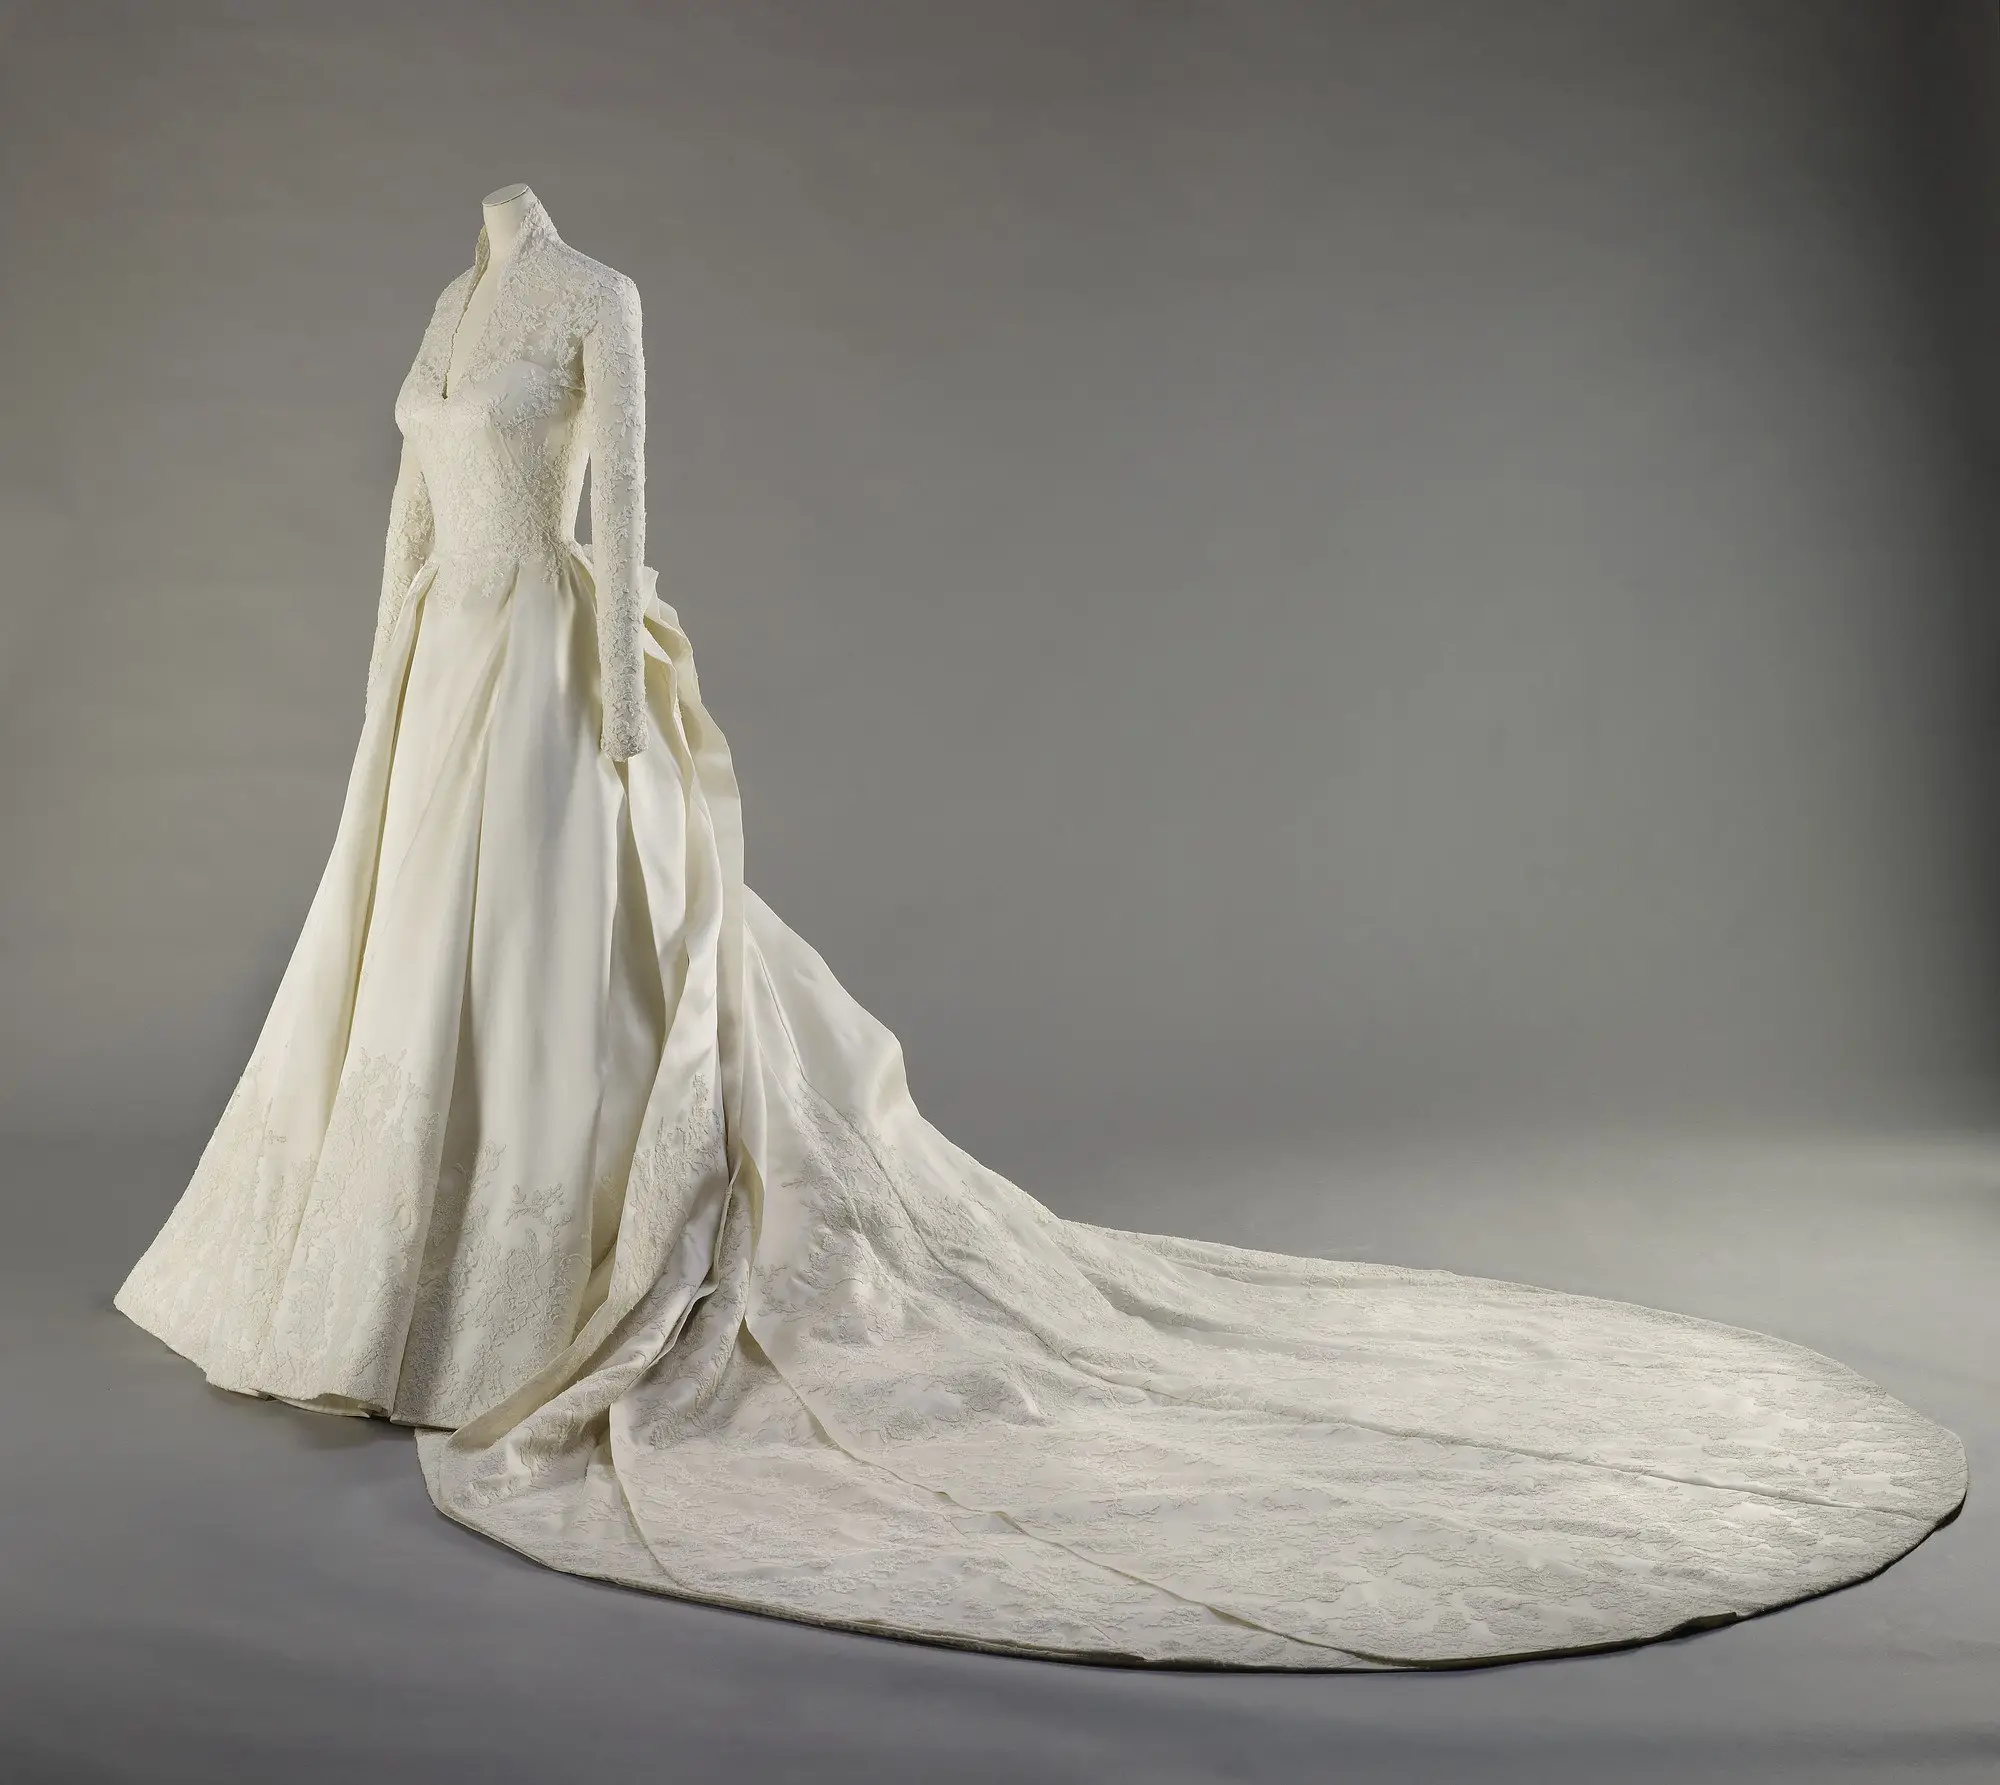 Duchess of Cambridge's Wedding gown